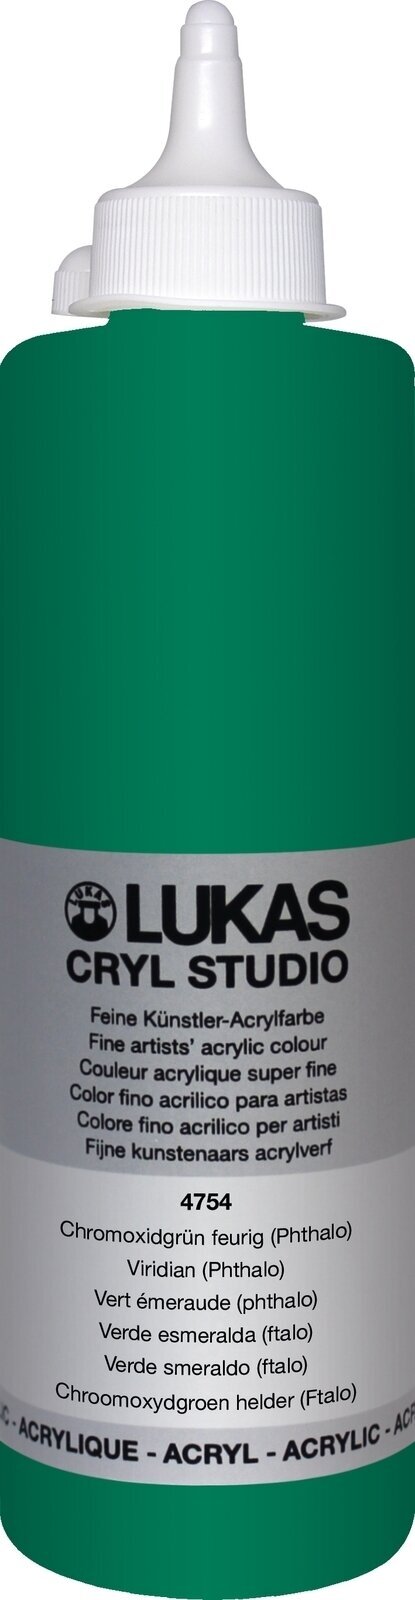 Peinture acrylique Lukas Cryl Studio Acrylic Paint Plastic Bottle Peinture acrylique Viridian (Phthalo) 500 ml 1 pc